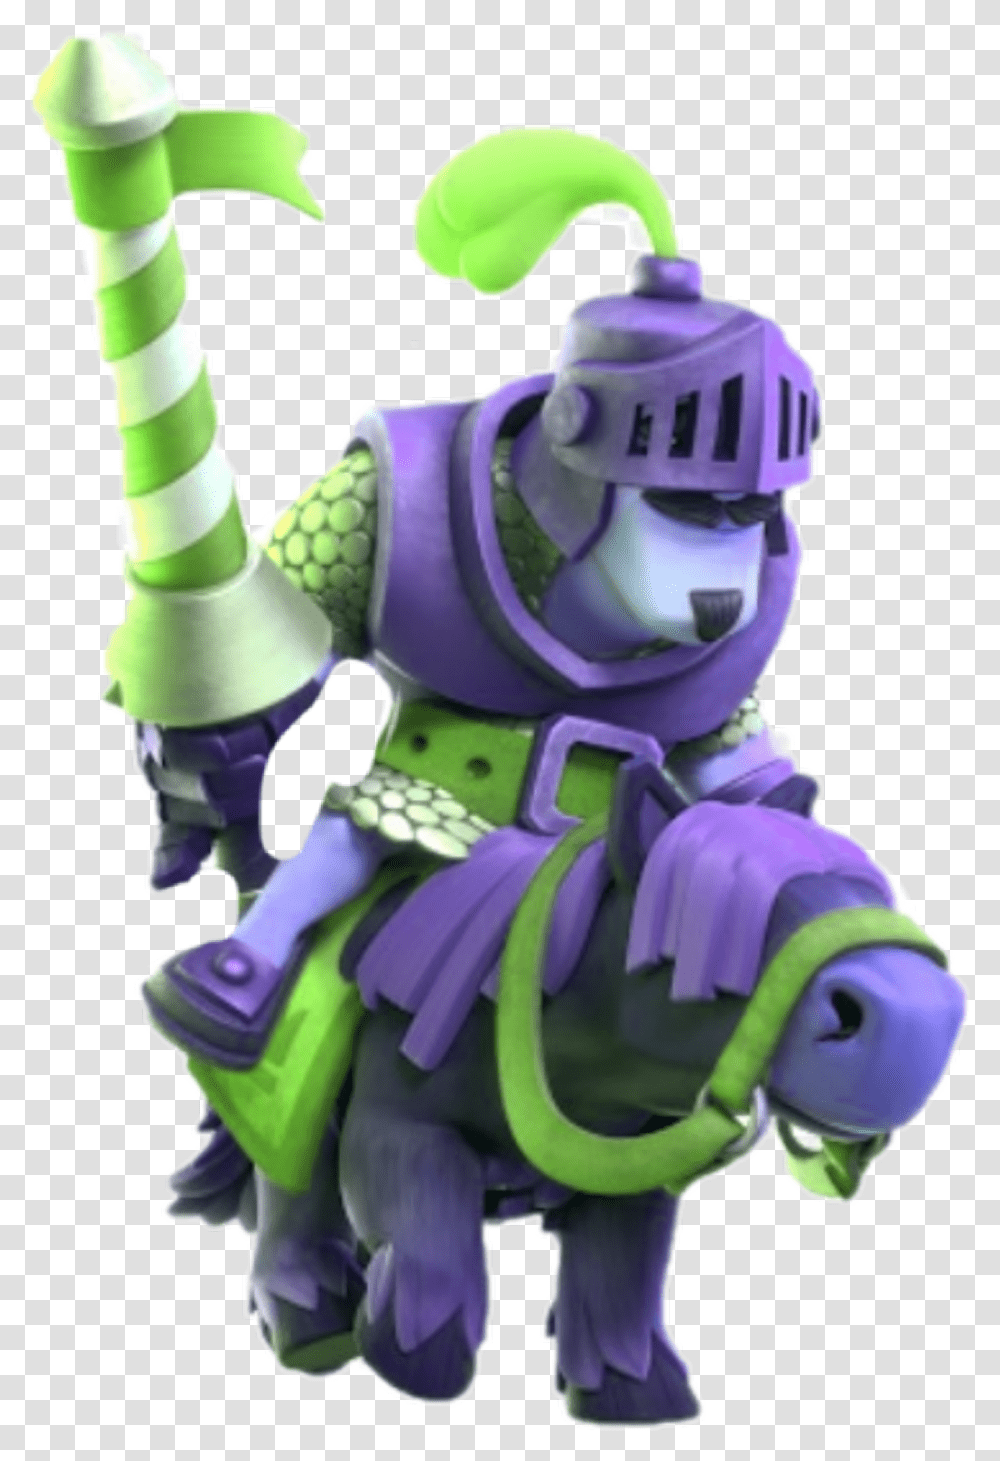 Prince Clashroyale Greenprince Prince2 Purpleprince Clash Royale Image, Toy, Astronaut Transparent Png